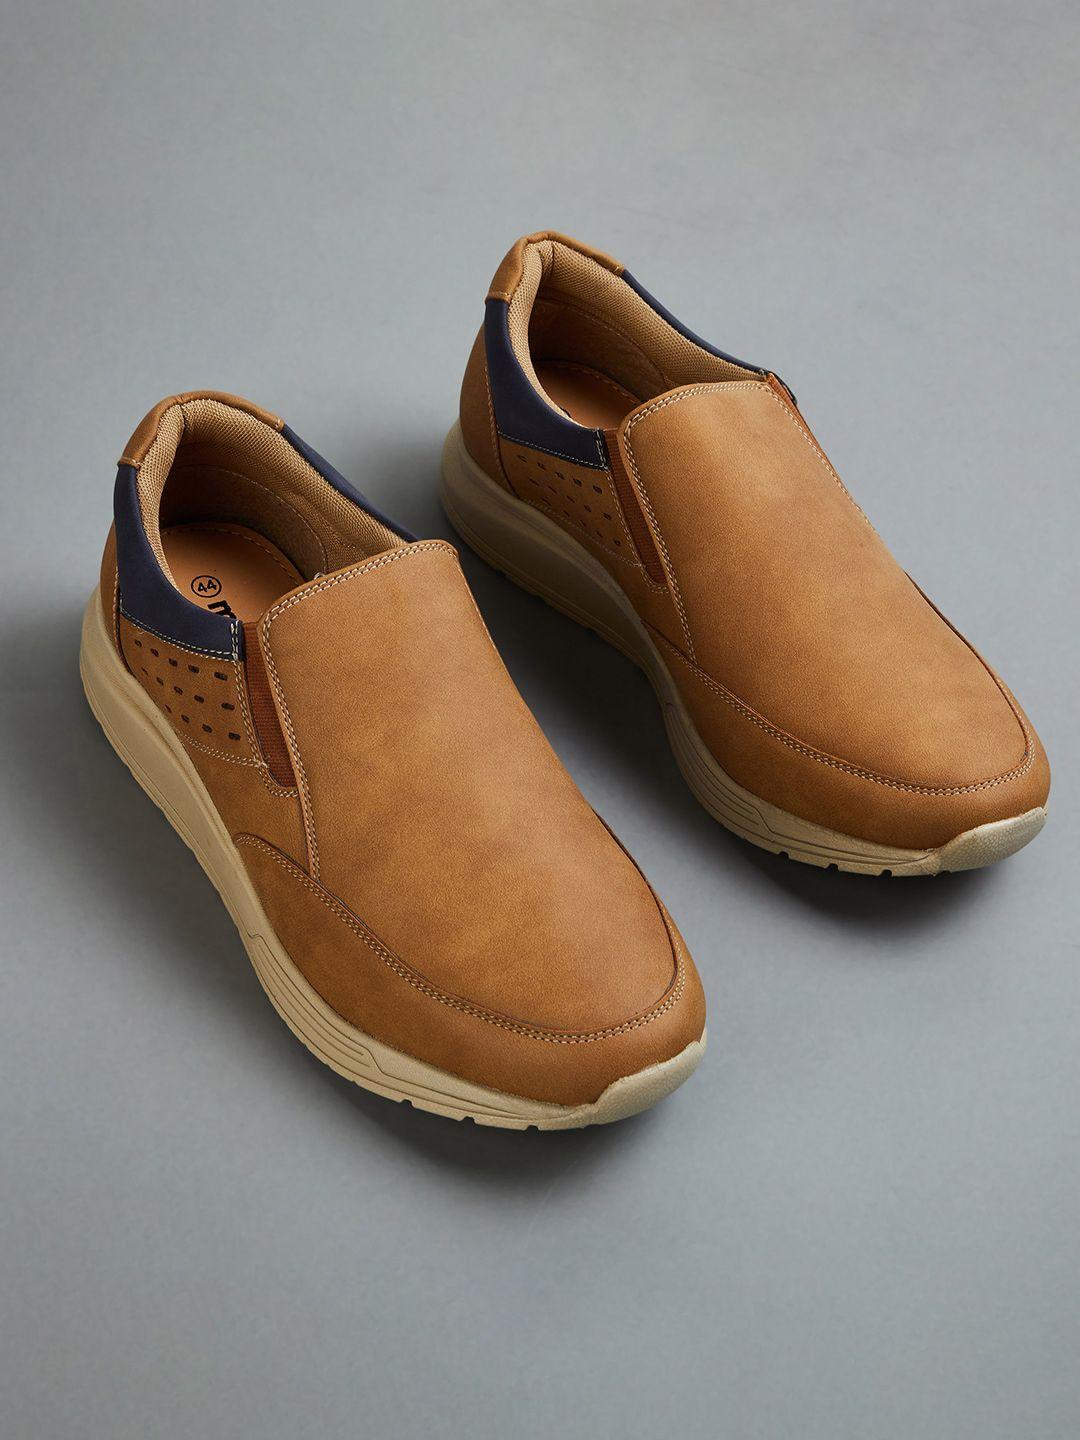 max-men-contrast-sole-slip-on-sneakers